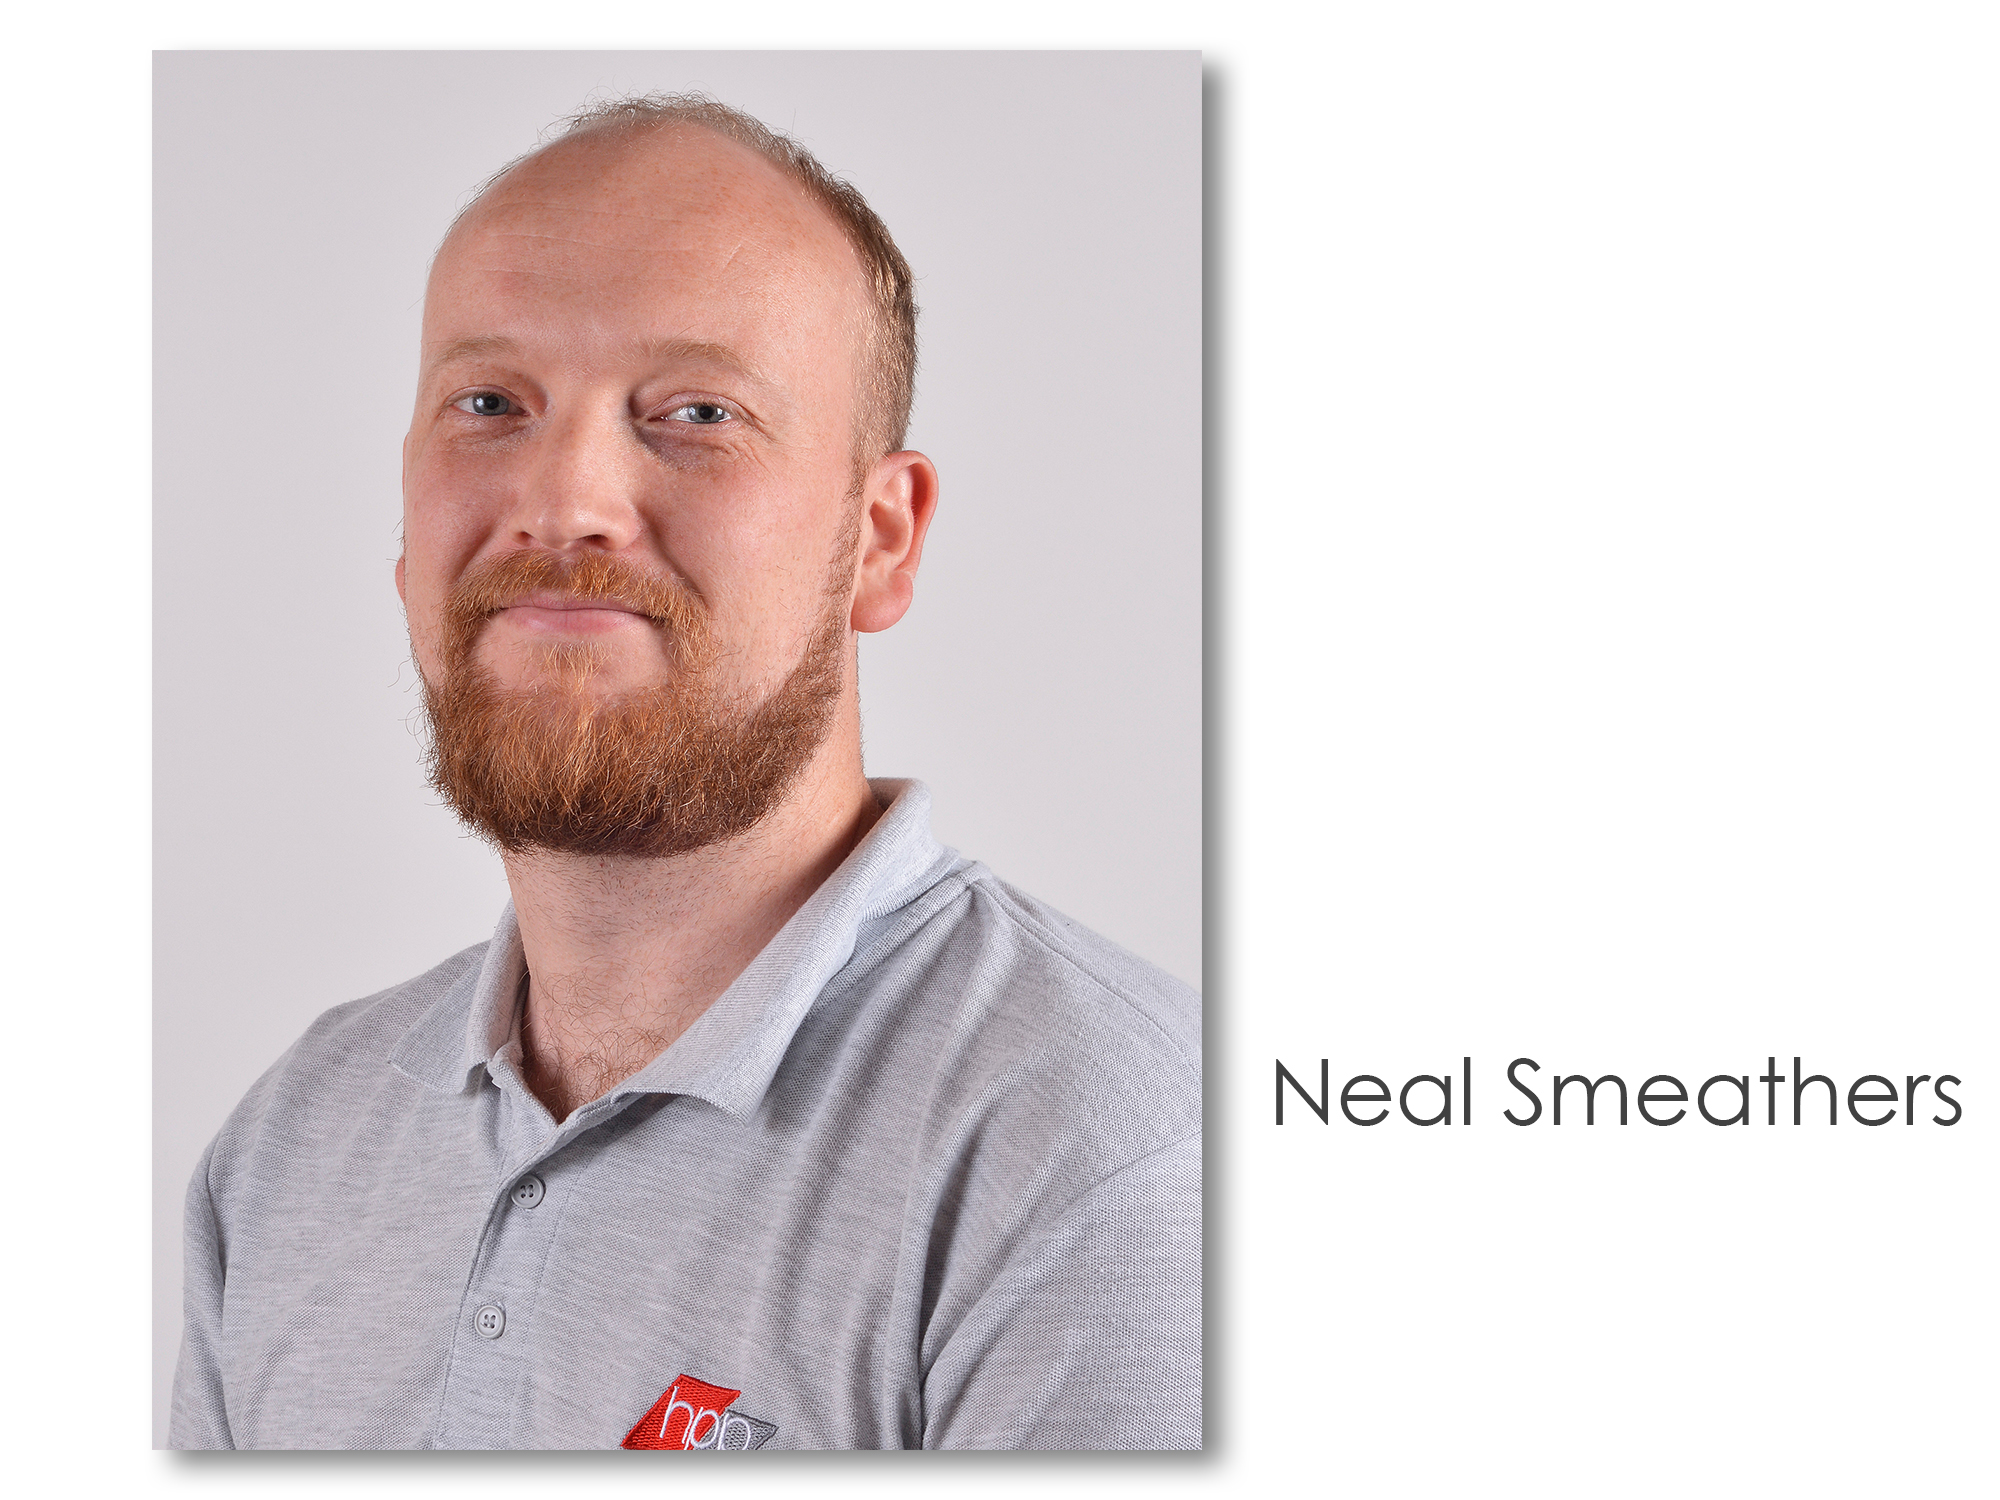 Neal Smeathers